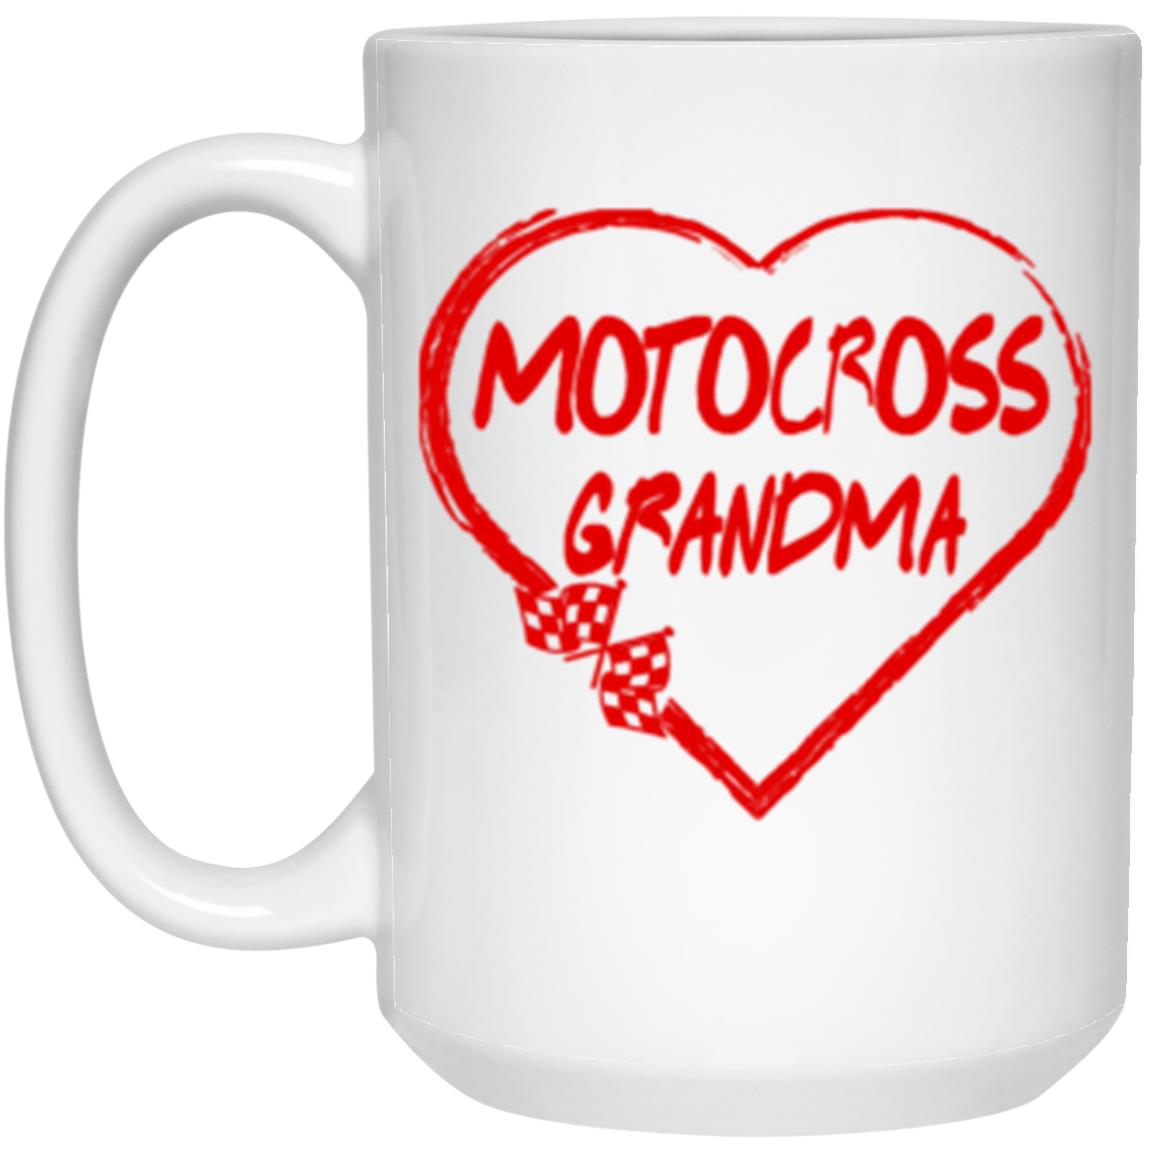 Motocross Grandma Heart 15 oz. White Mug